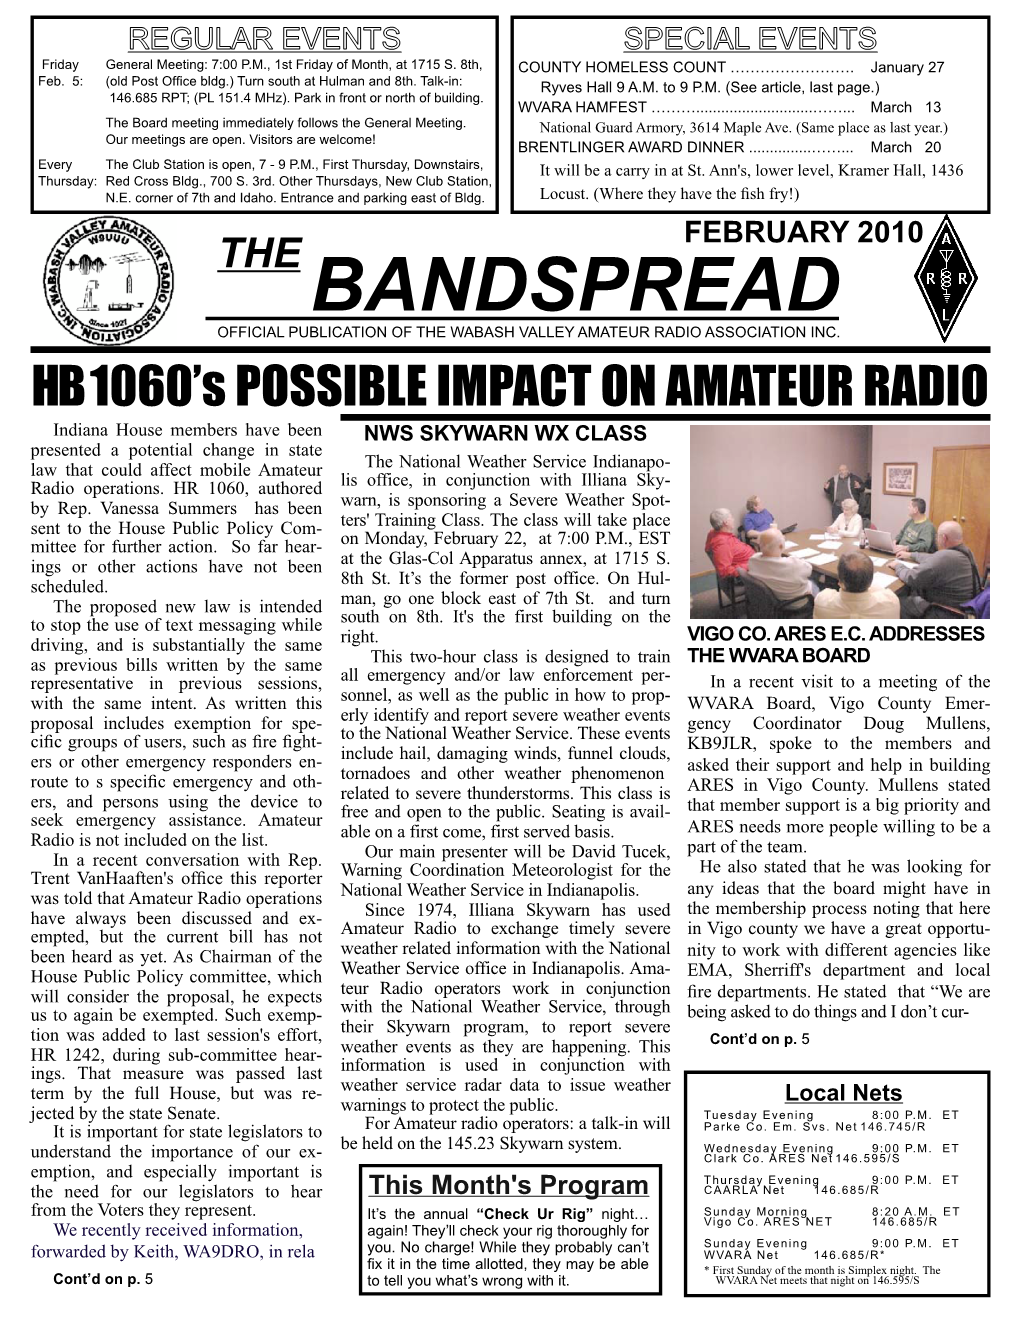 Bandspread Official Publication of the Wabash Valley Amateur Radio Association Inc